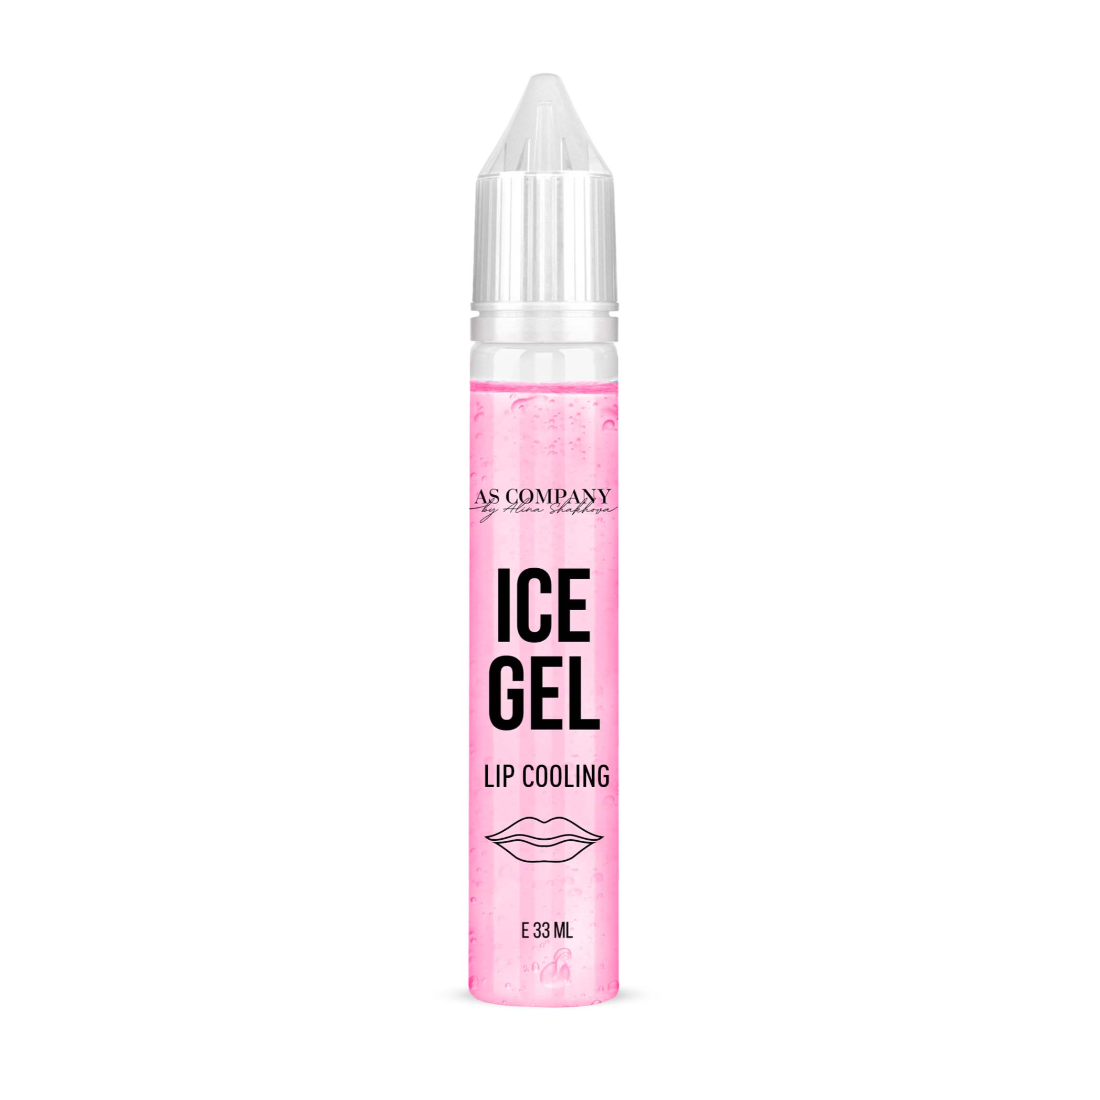 Ice gel (for lips) - 33ml